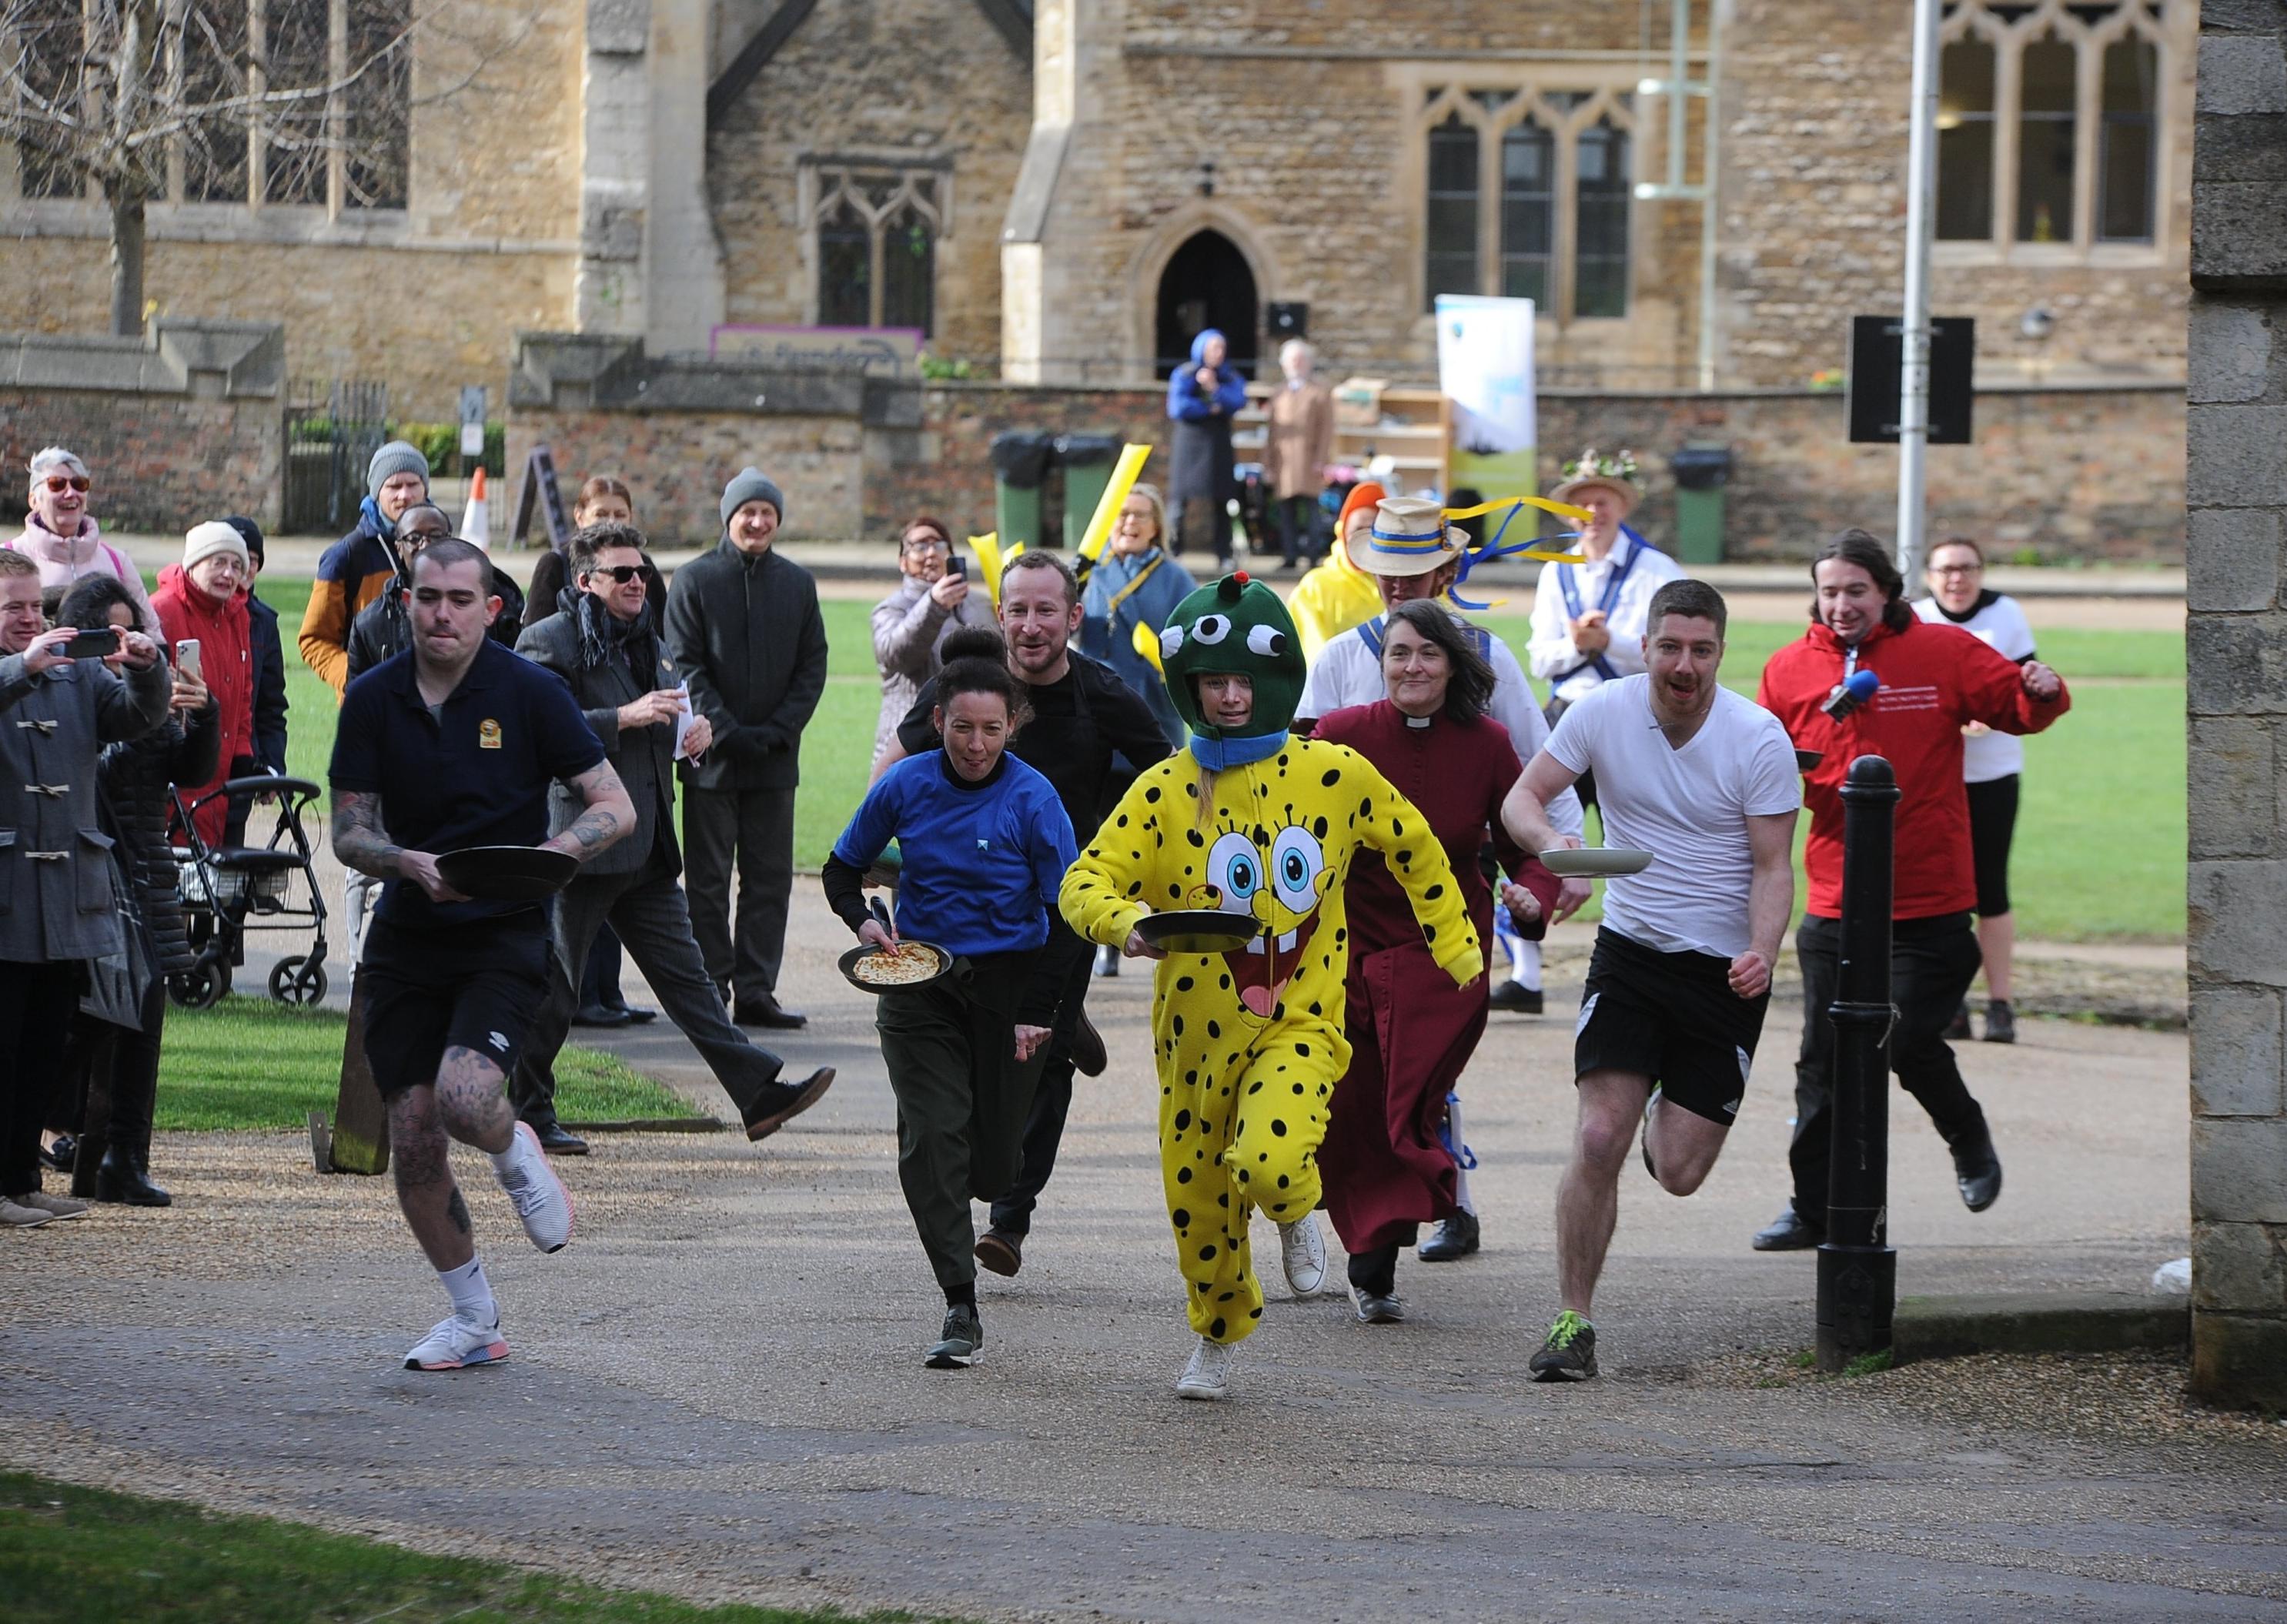 The pancake race at Peterborough Cathedral